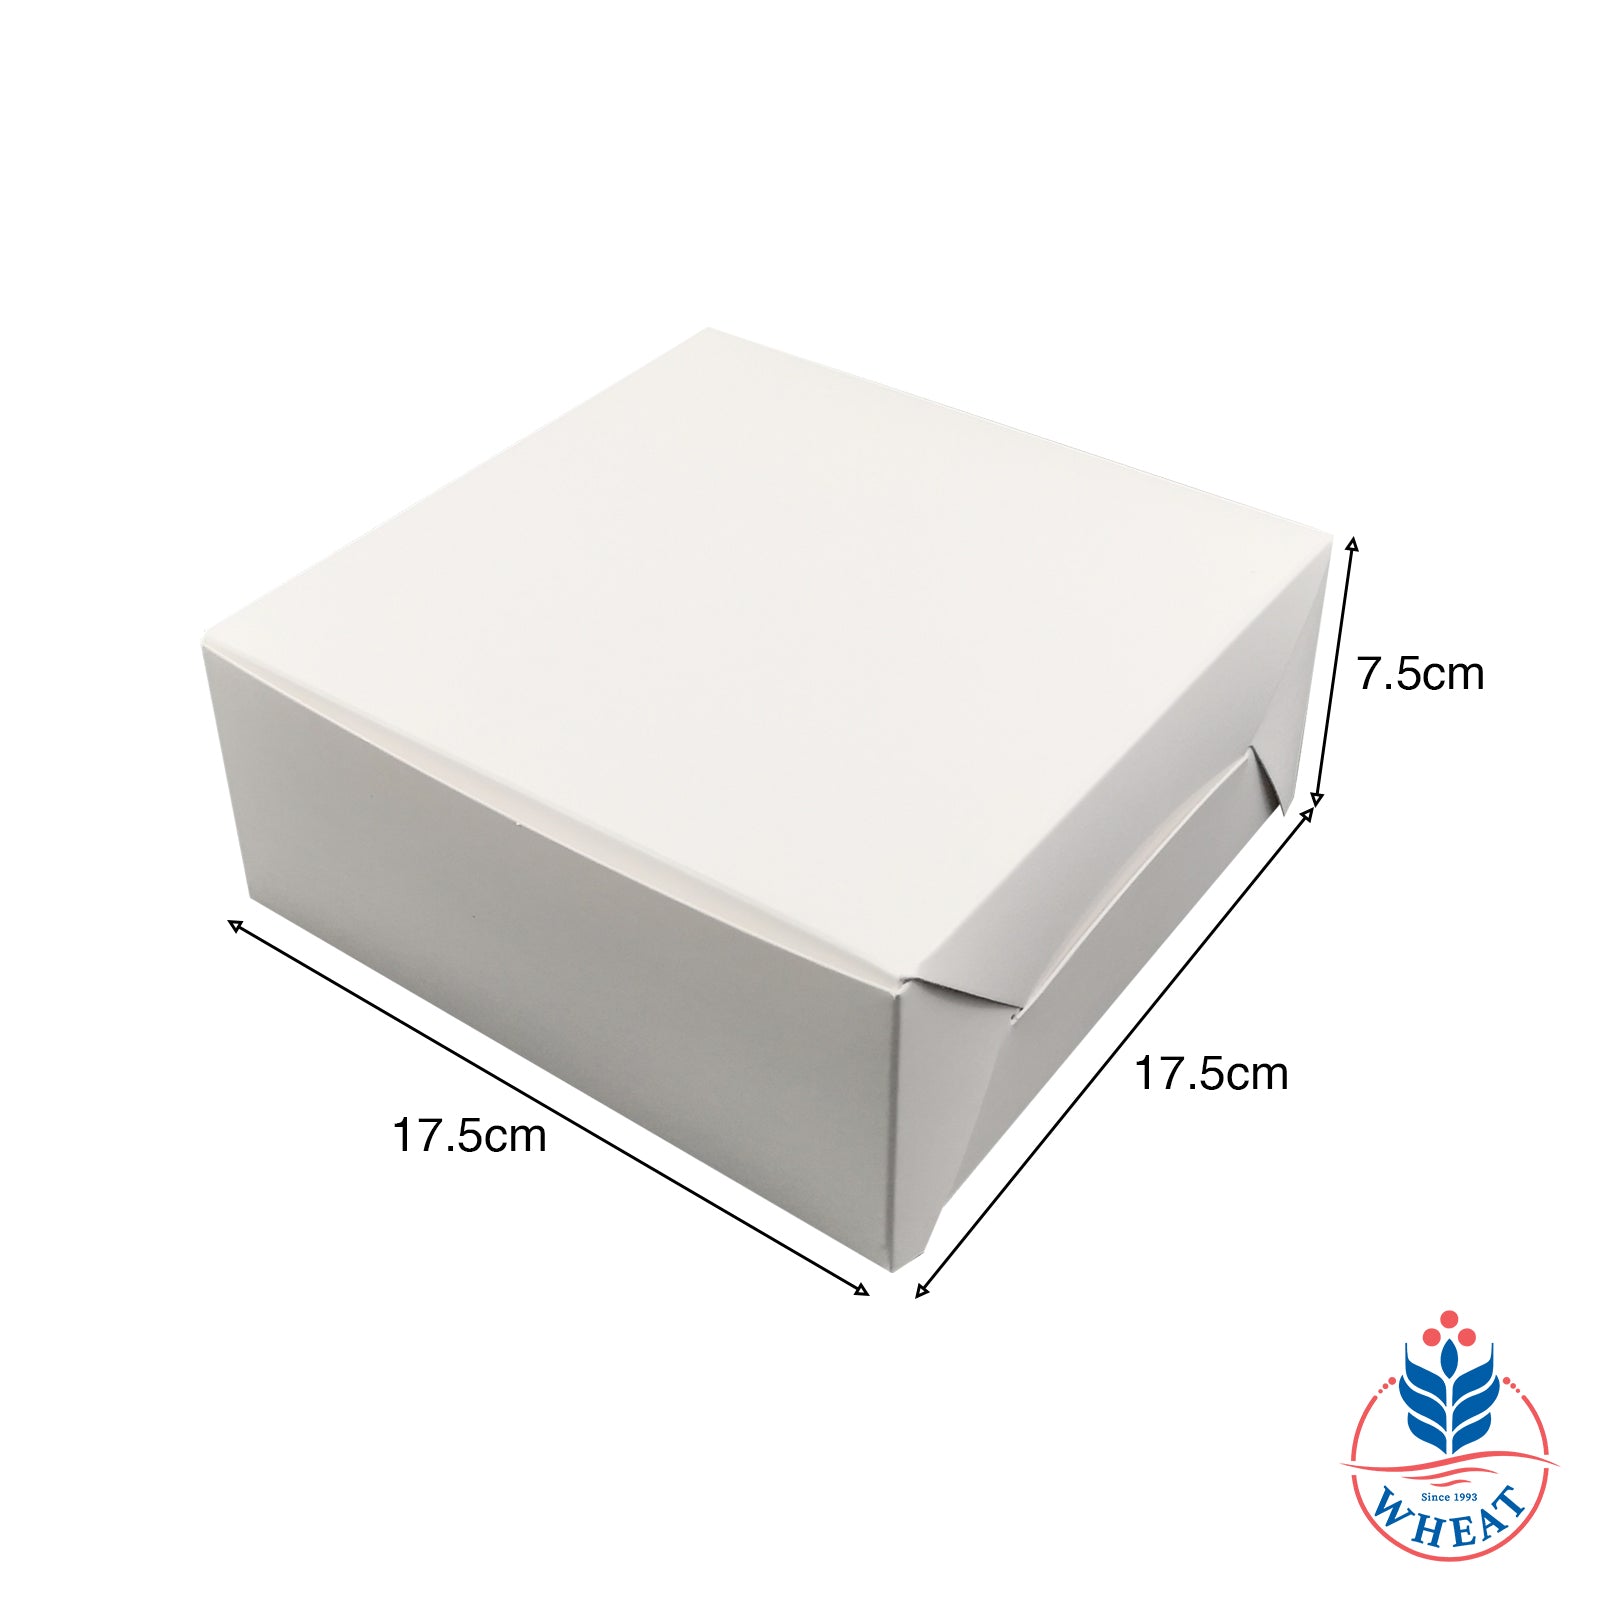 Cake Box - 17.5cm x 17.5cm x 7.5cmH